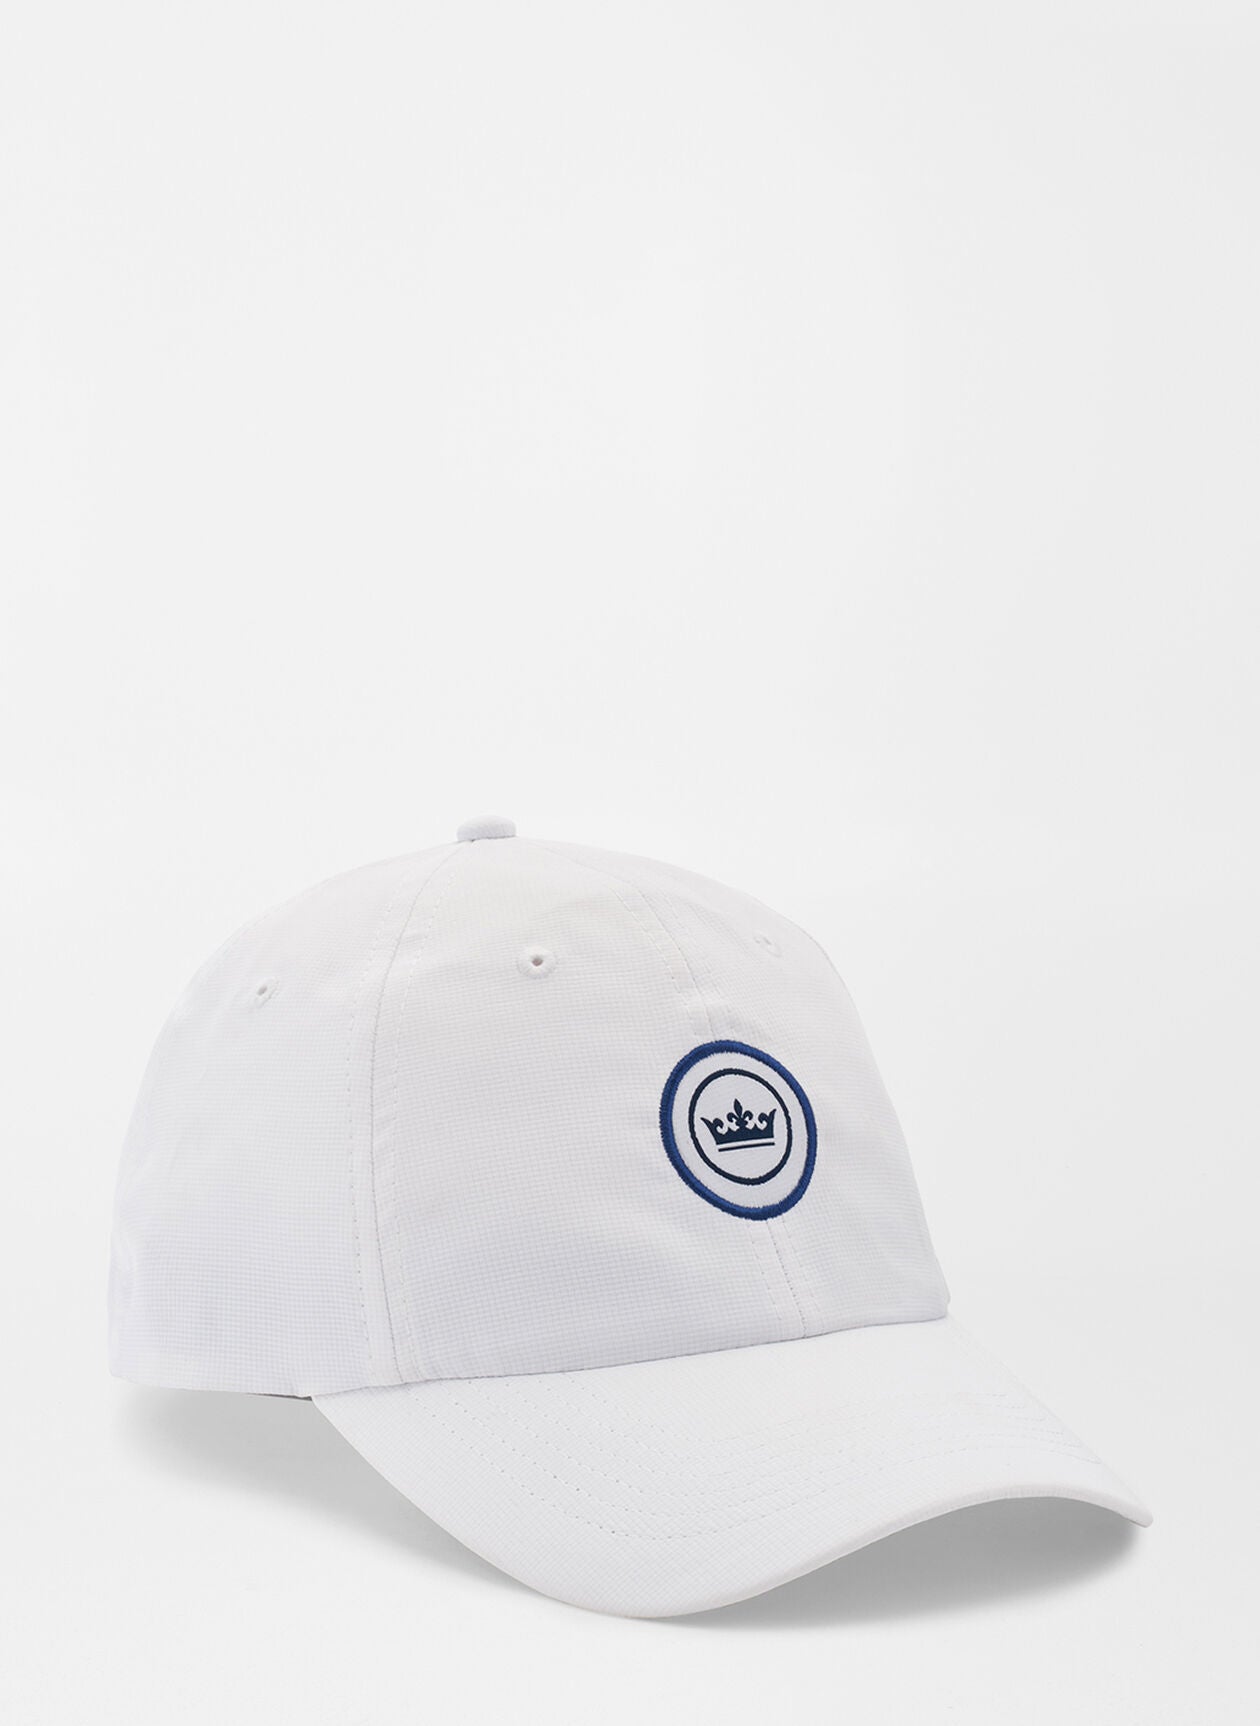 Crown Seal Performance Hat - White